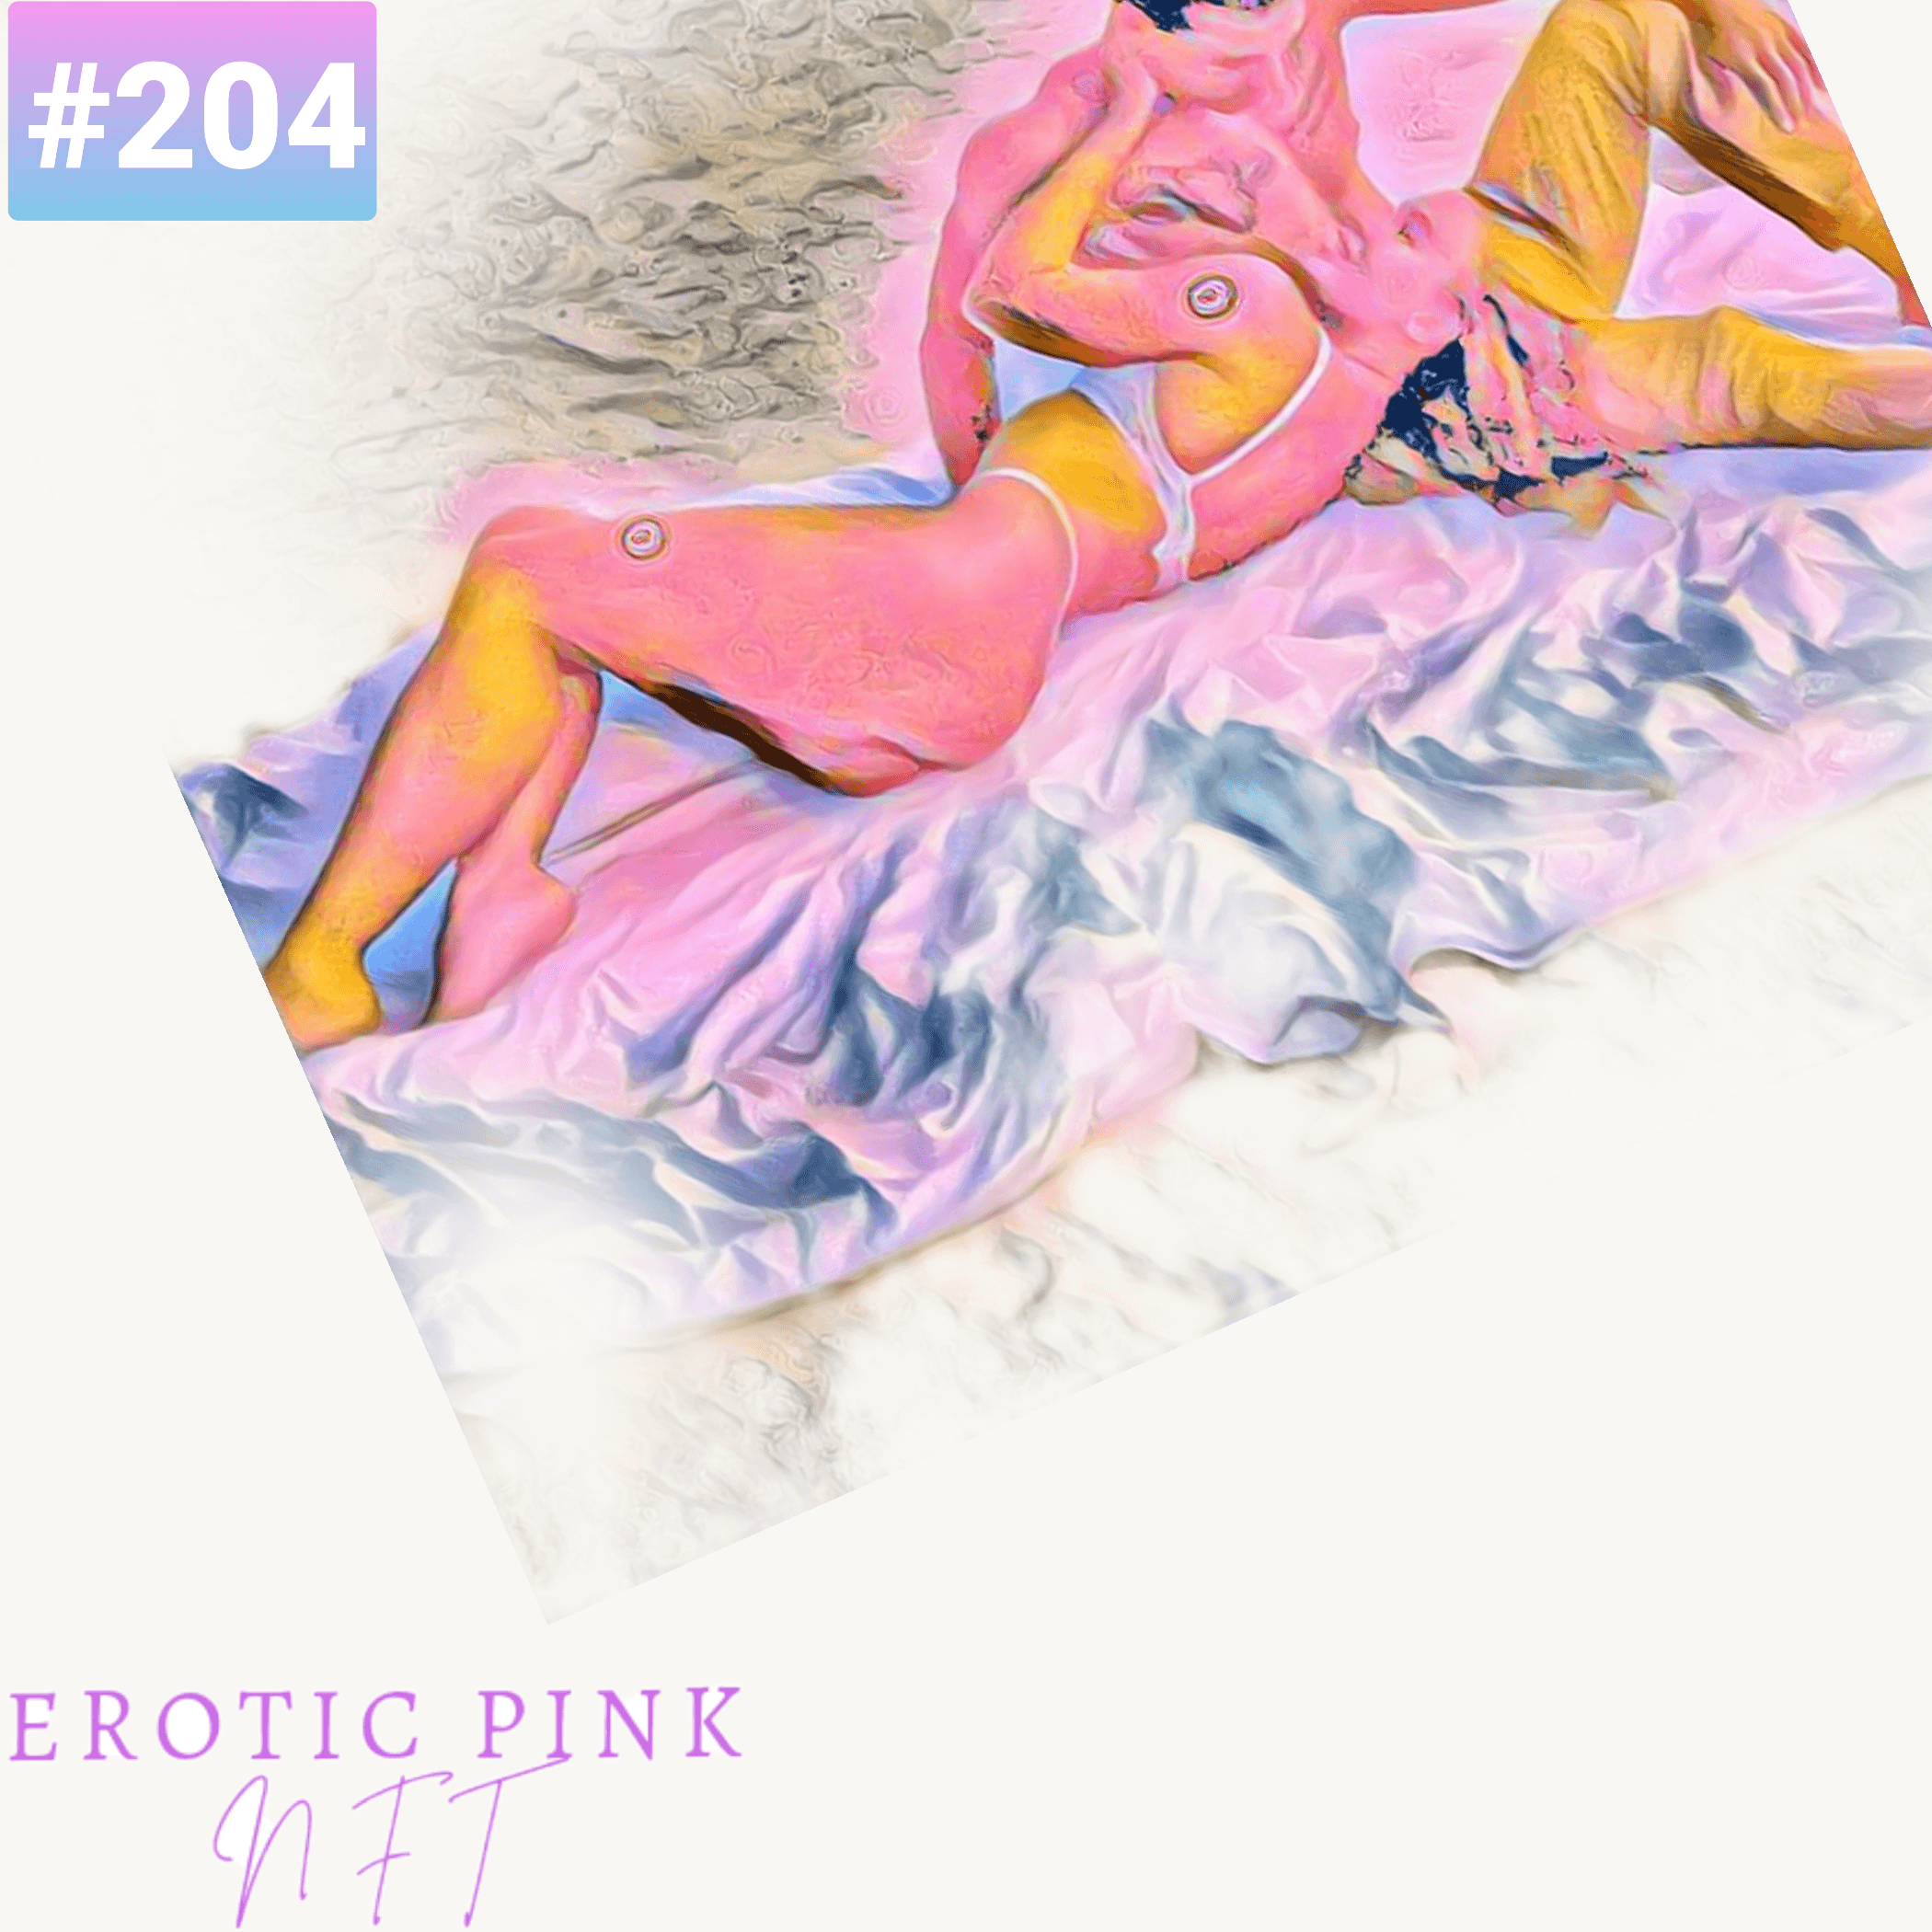 Erotic Pink #204